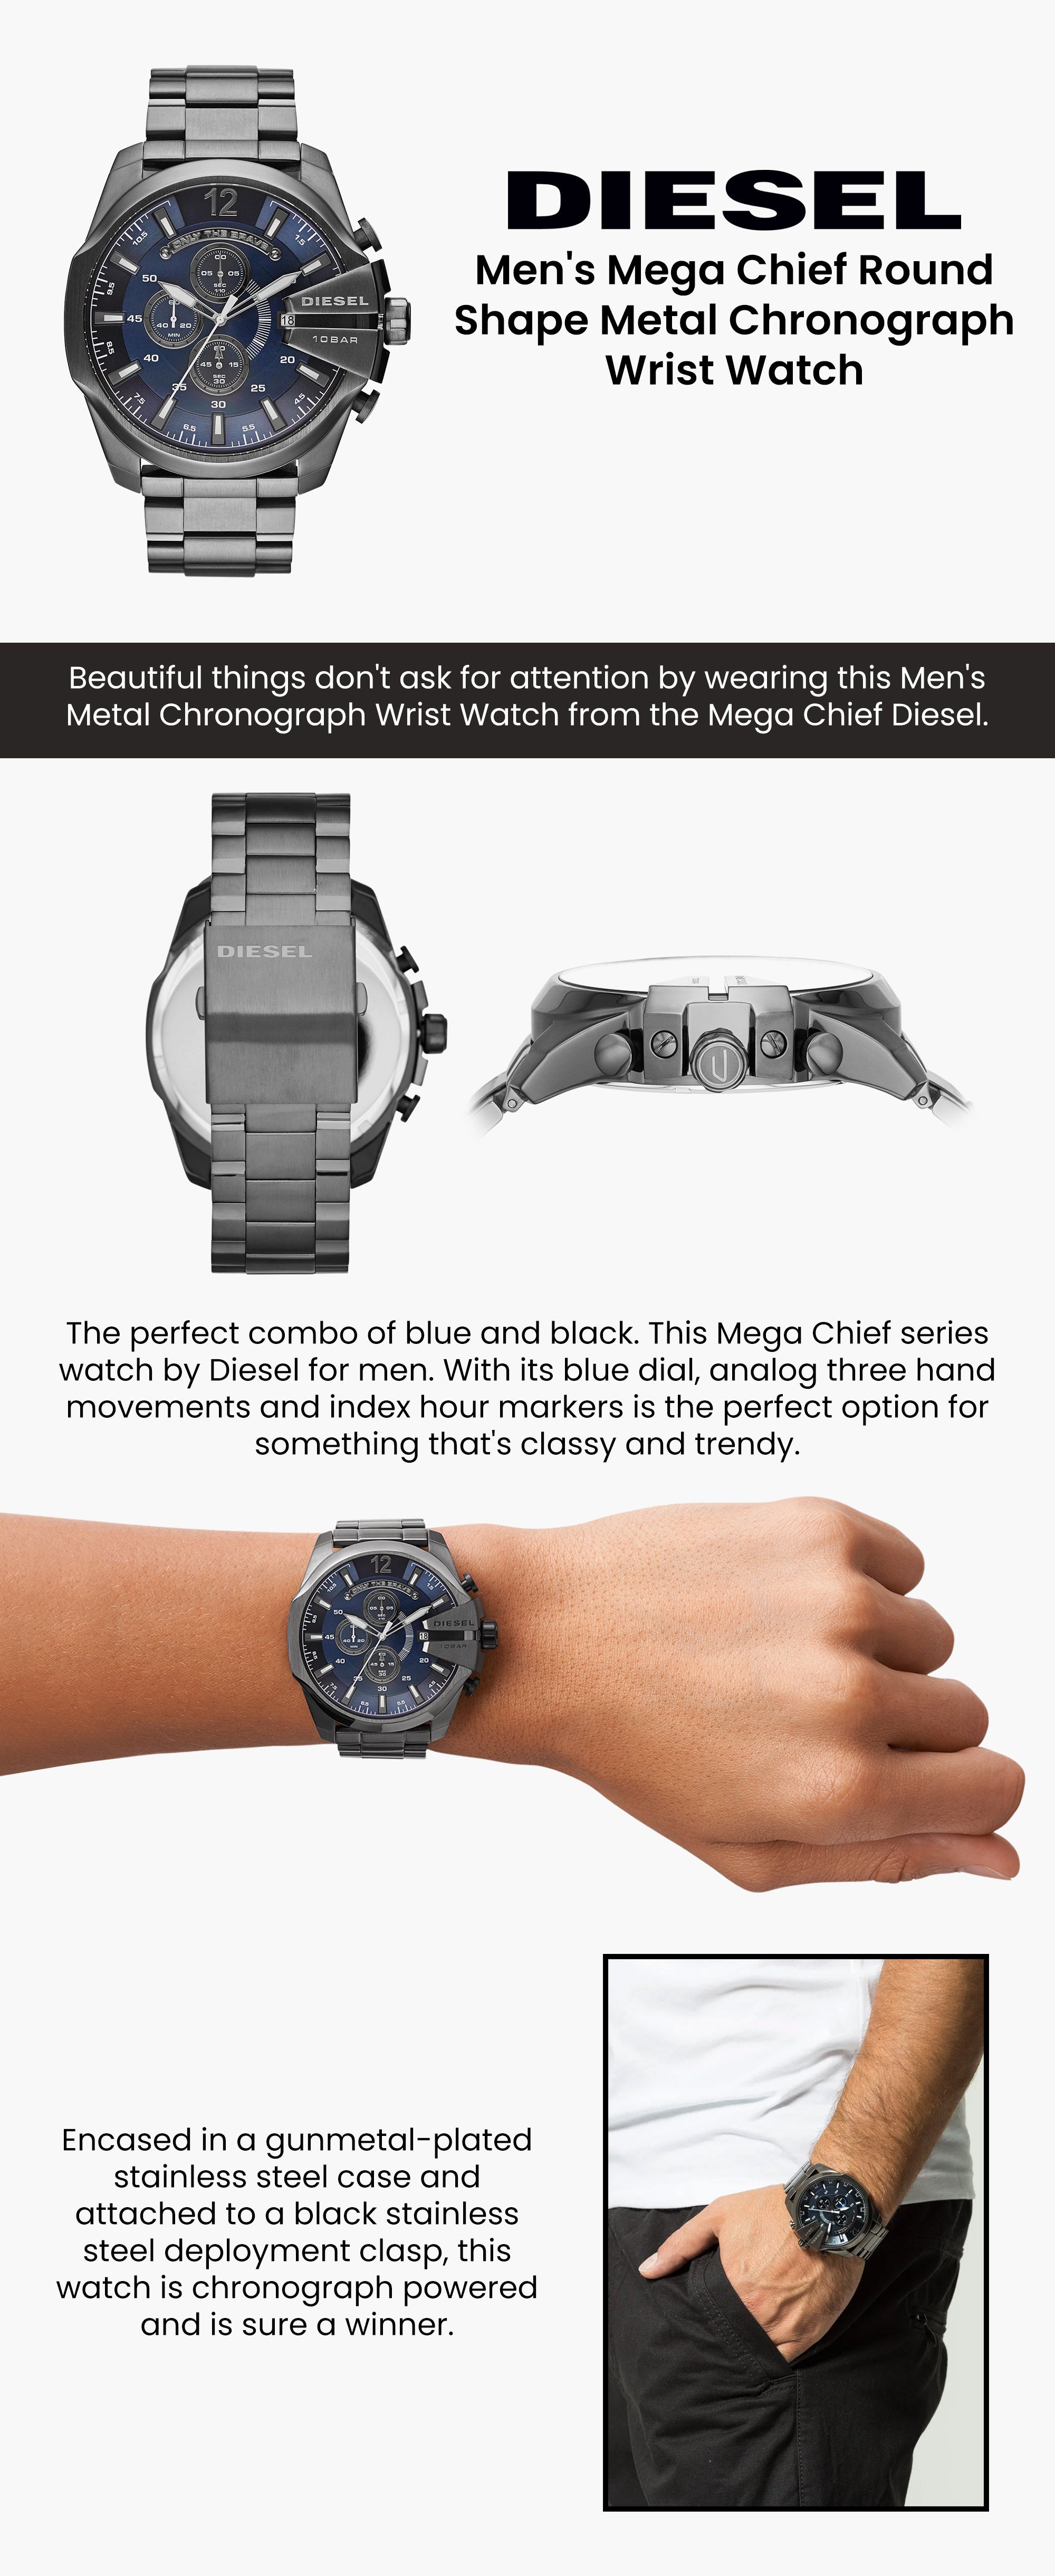 DIESEL Men's Mega Chief Round Shape Stainless Steel Chronograph Wrist Watch  51 mm - Grey - DZ4329 UAE | Dubai, Abu Dhabi